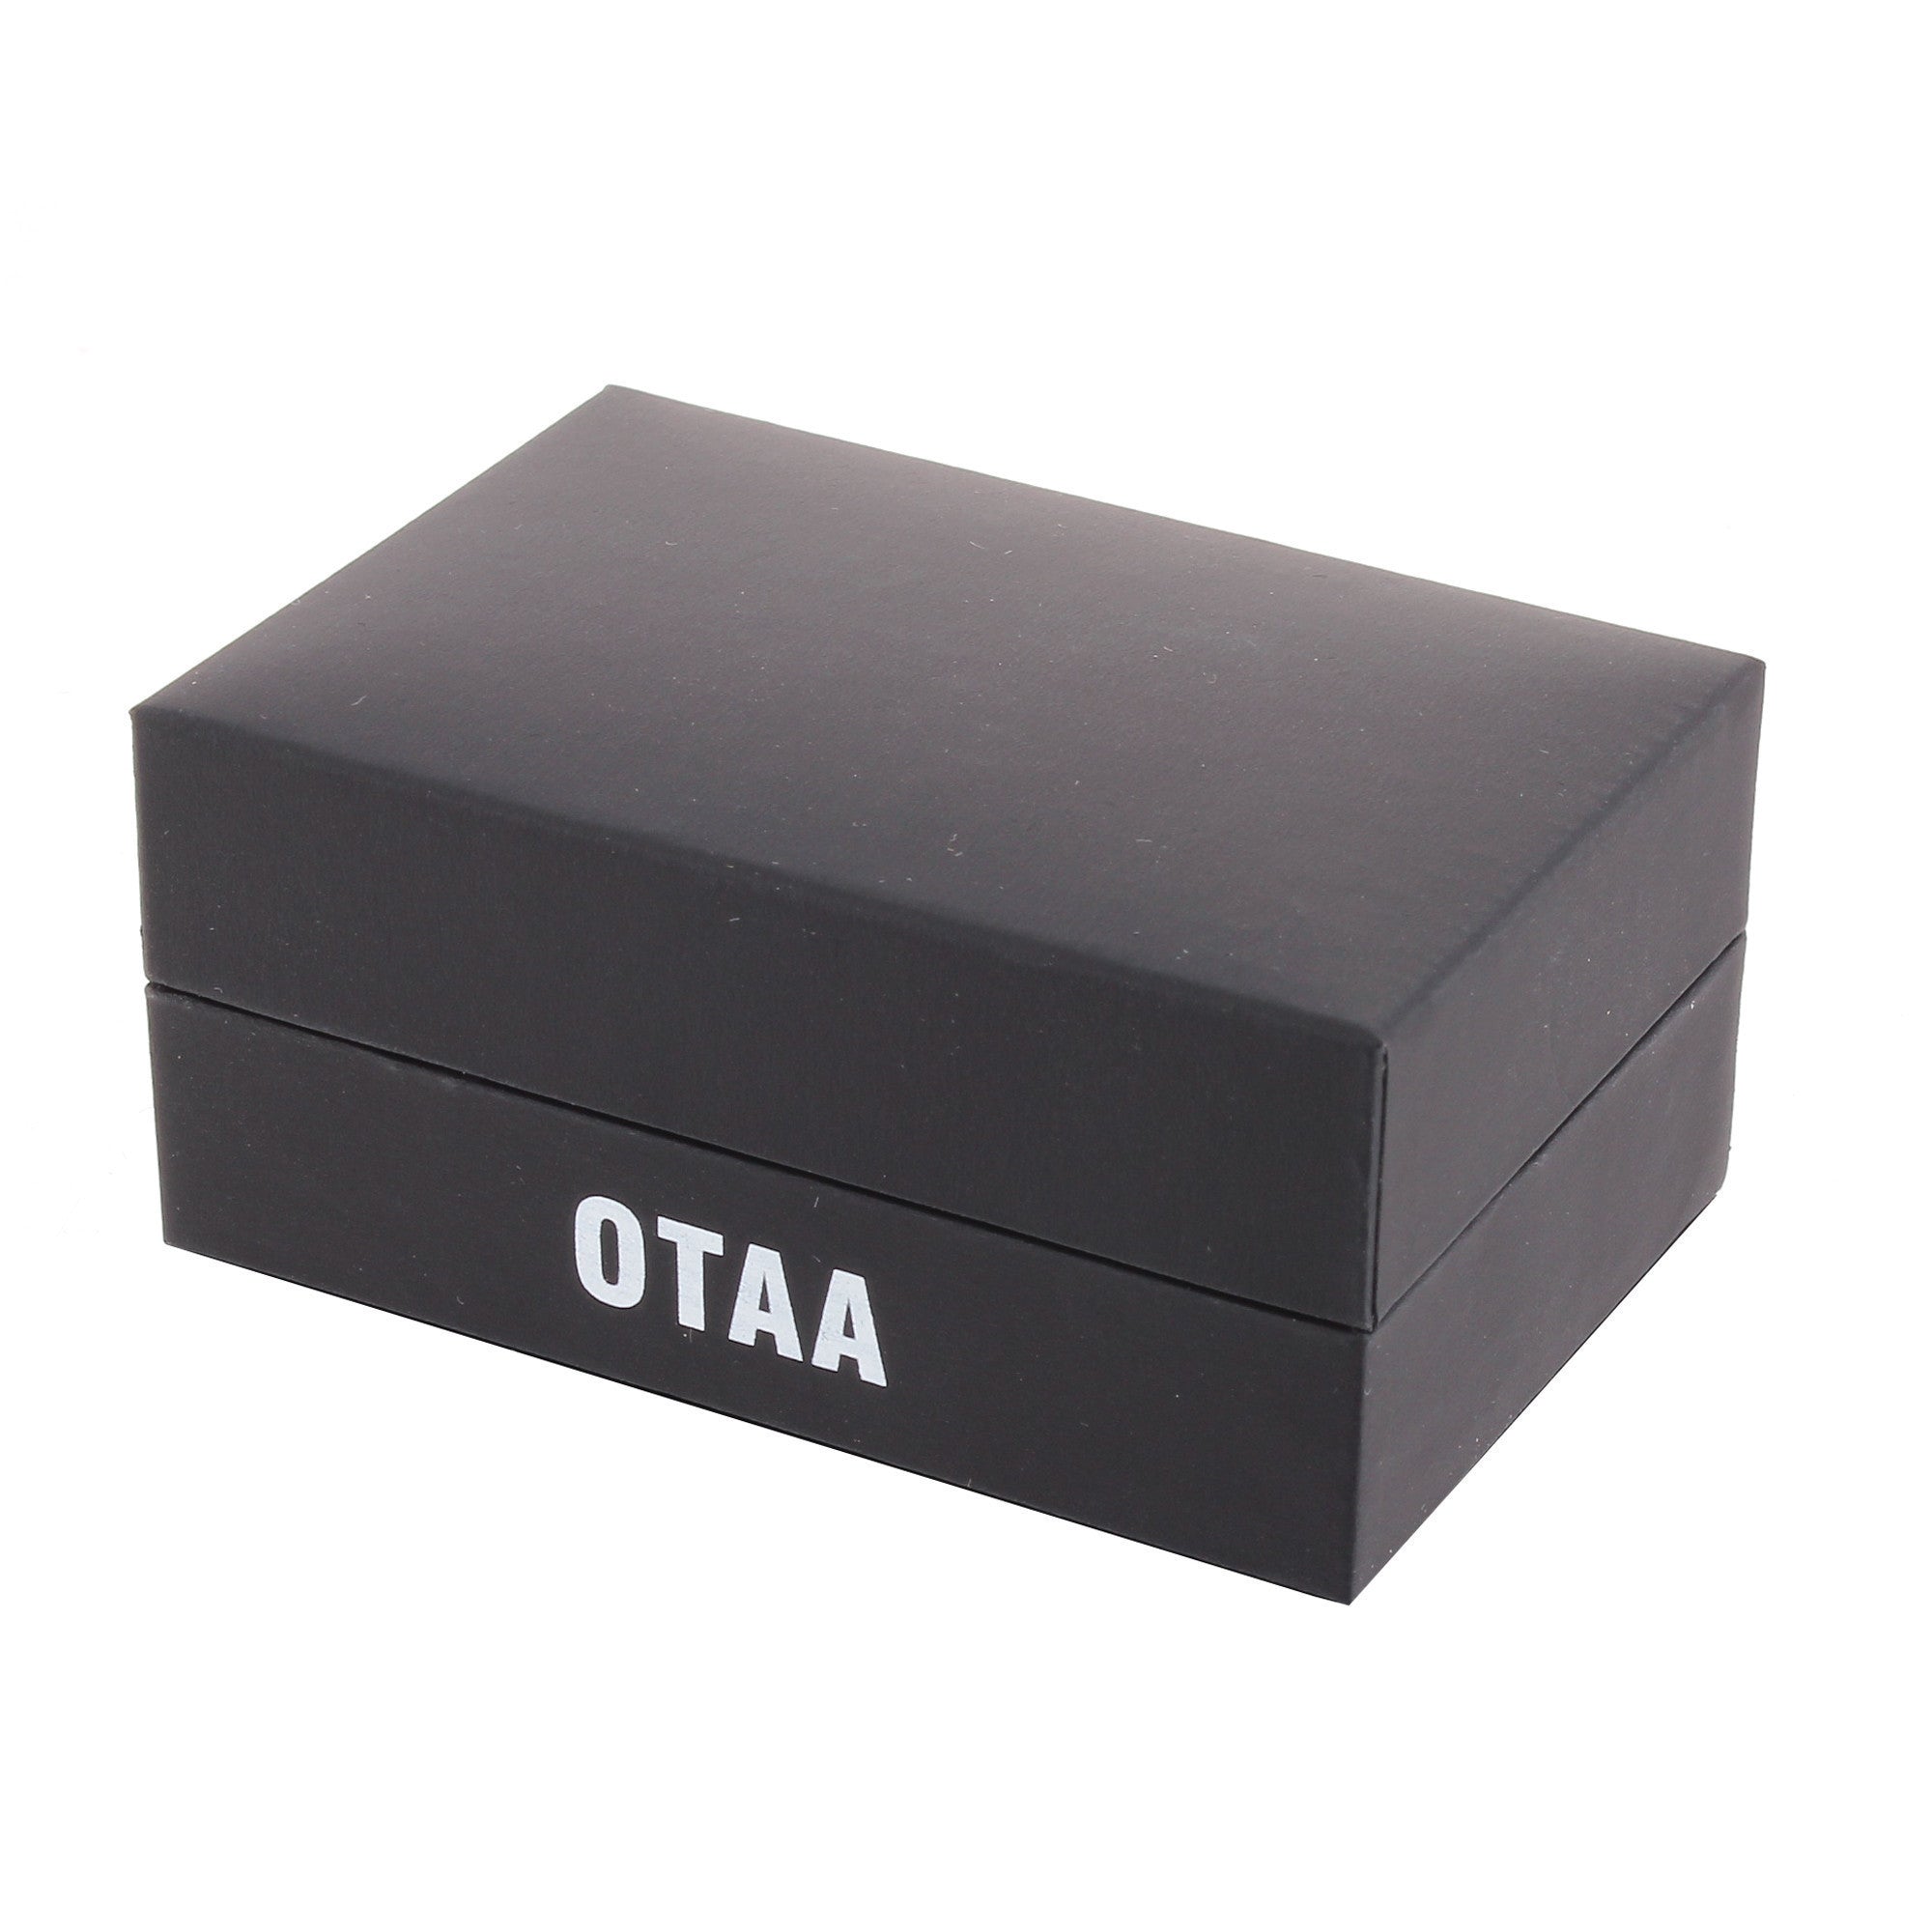 OTAA Cufflink Box